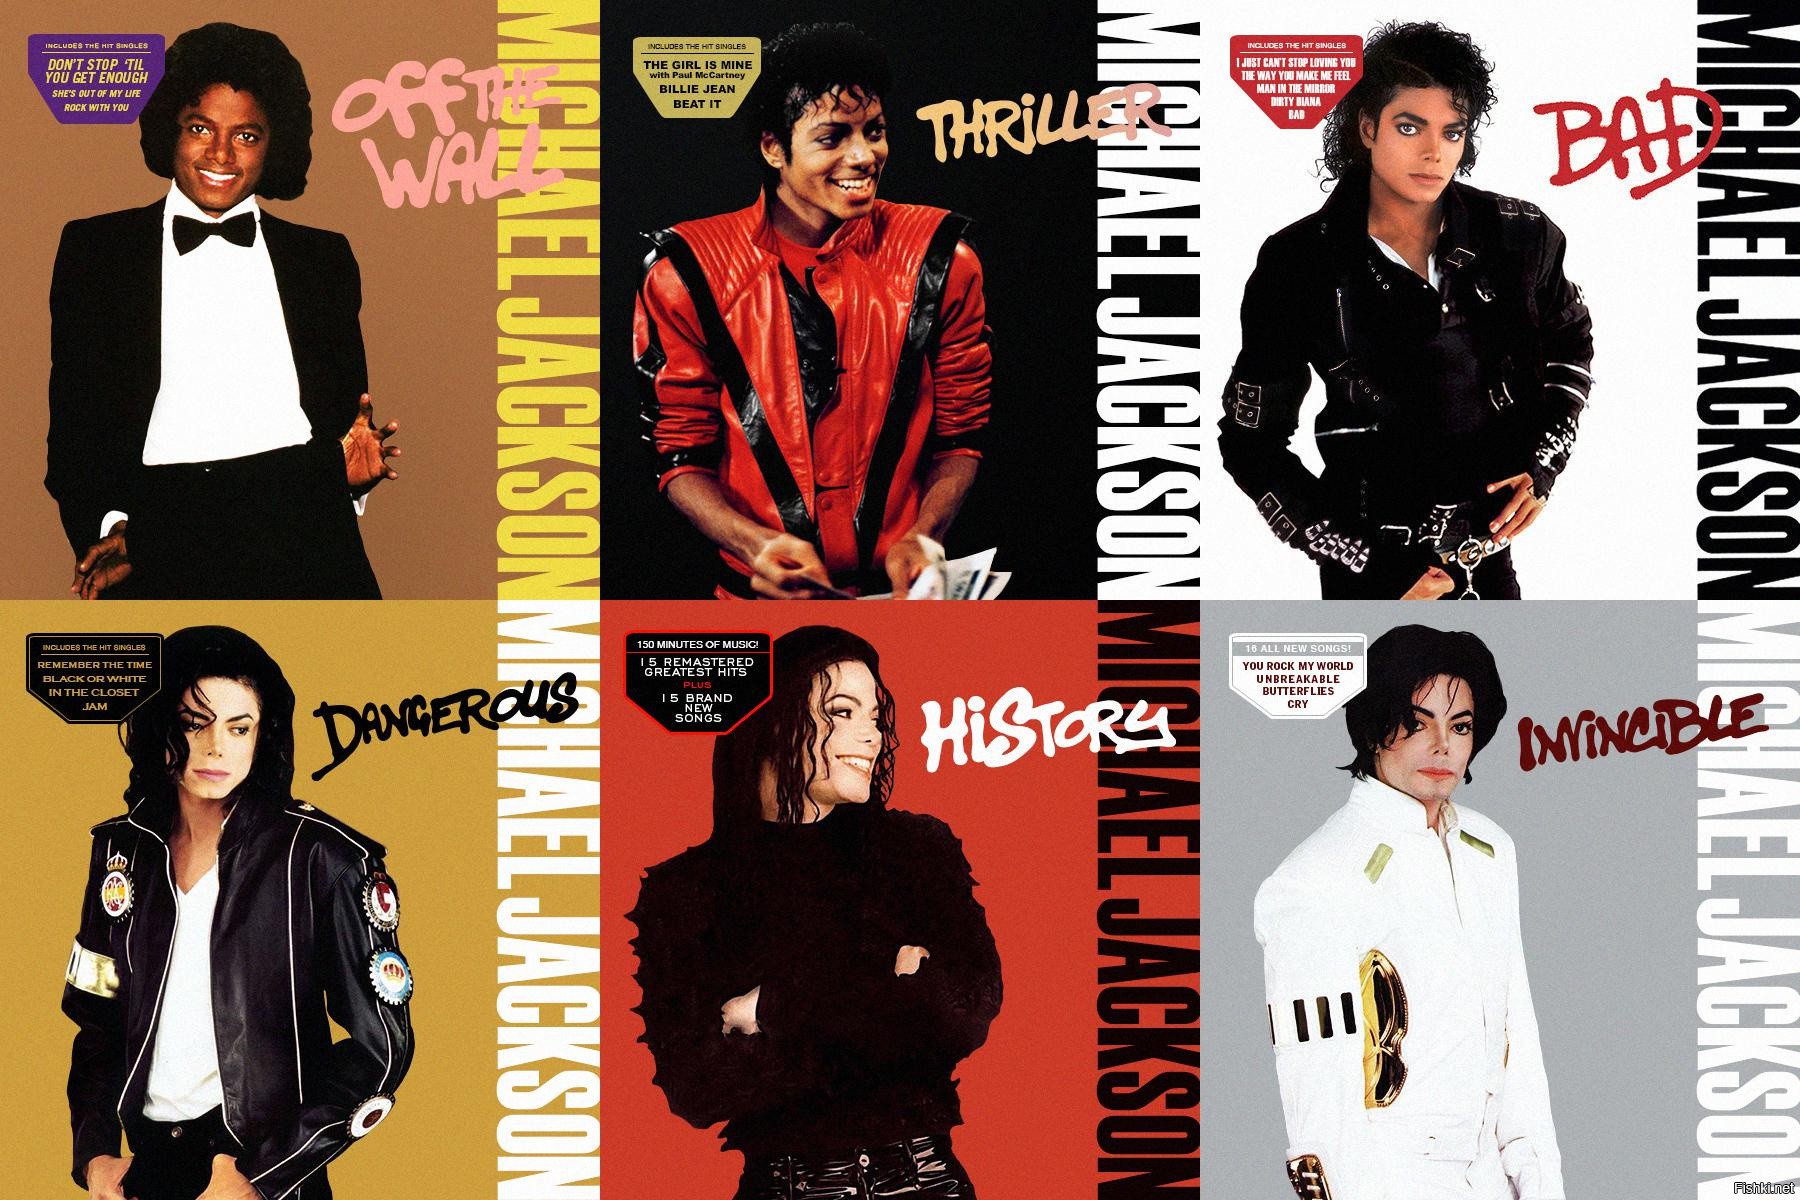 Michael jackson albums. Michael Jackson - Bad (album 1987).